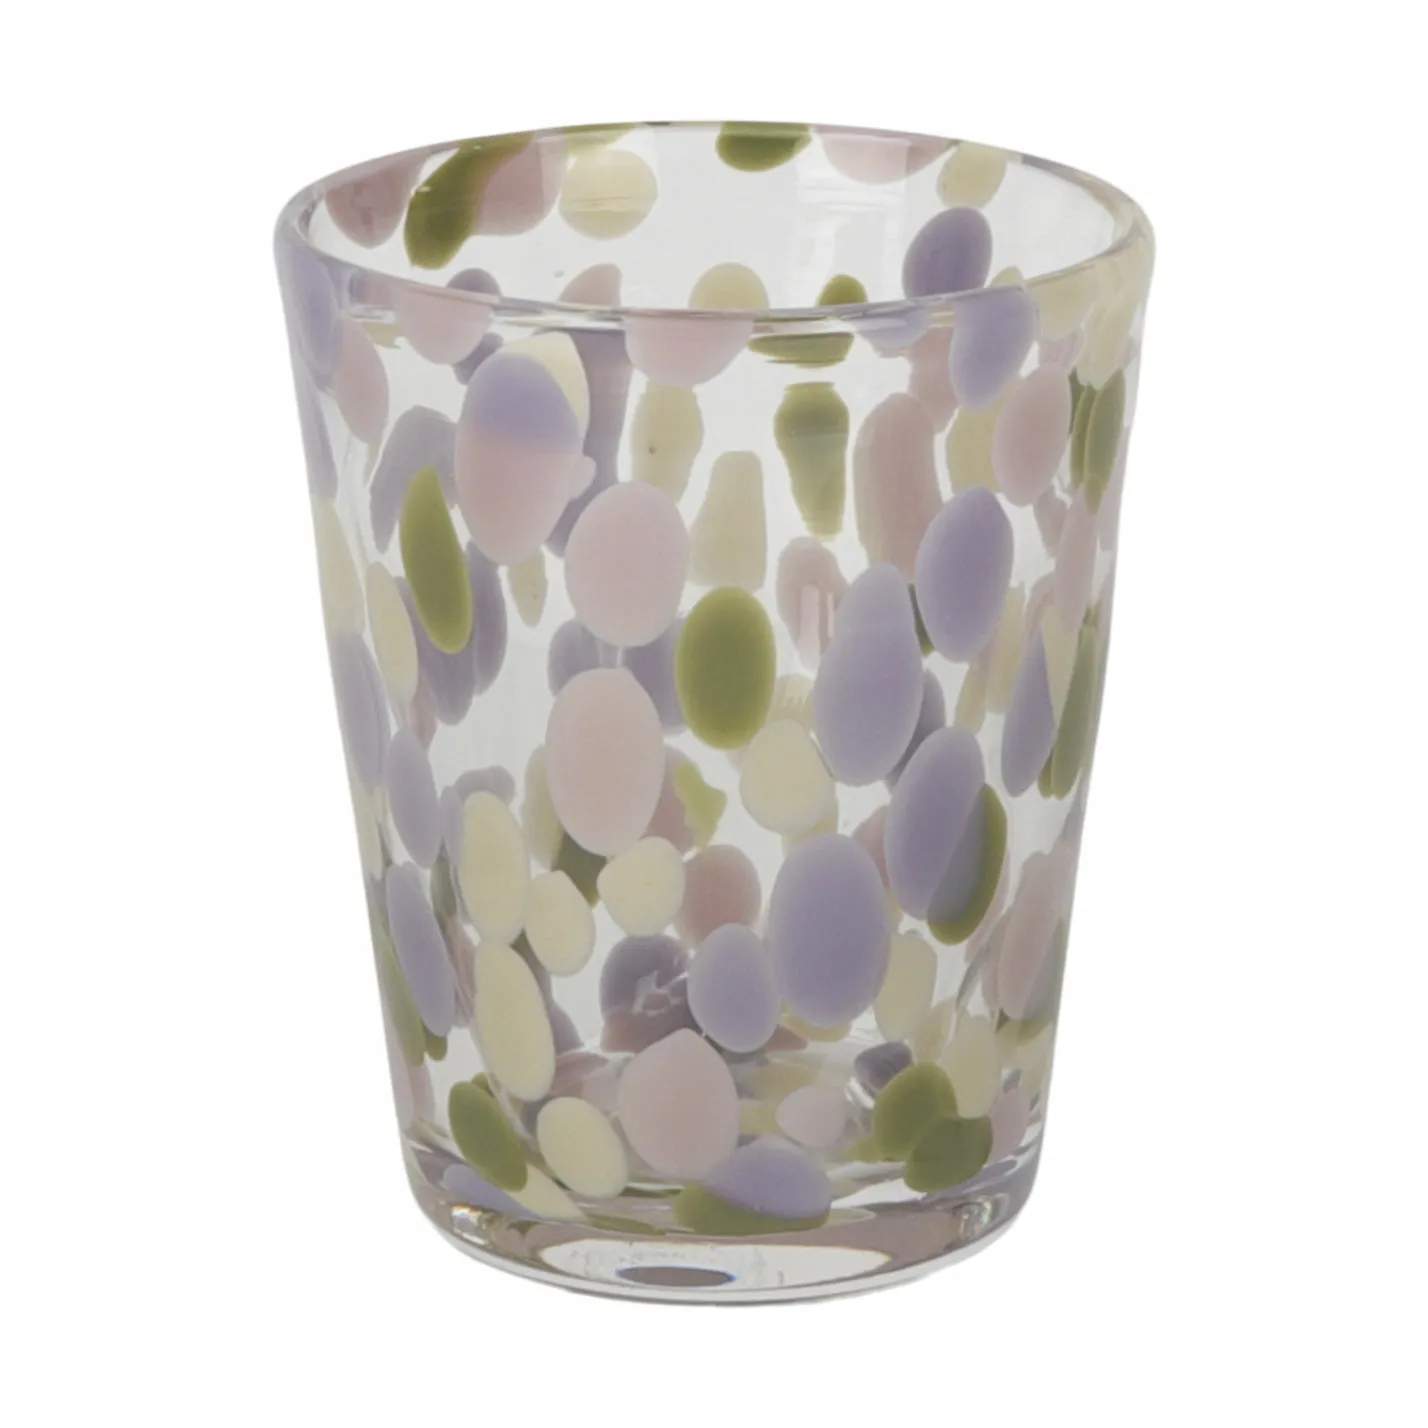 Vandglas confetti, lavendel/oliven, large